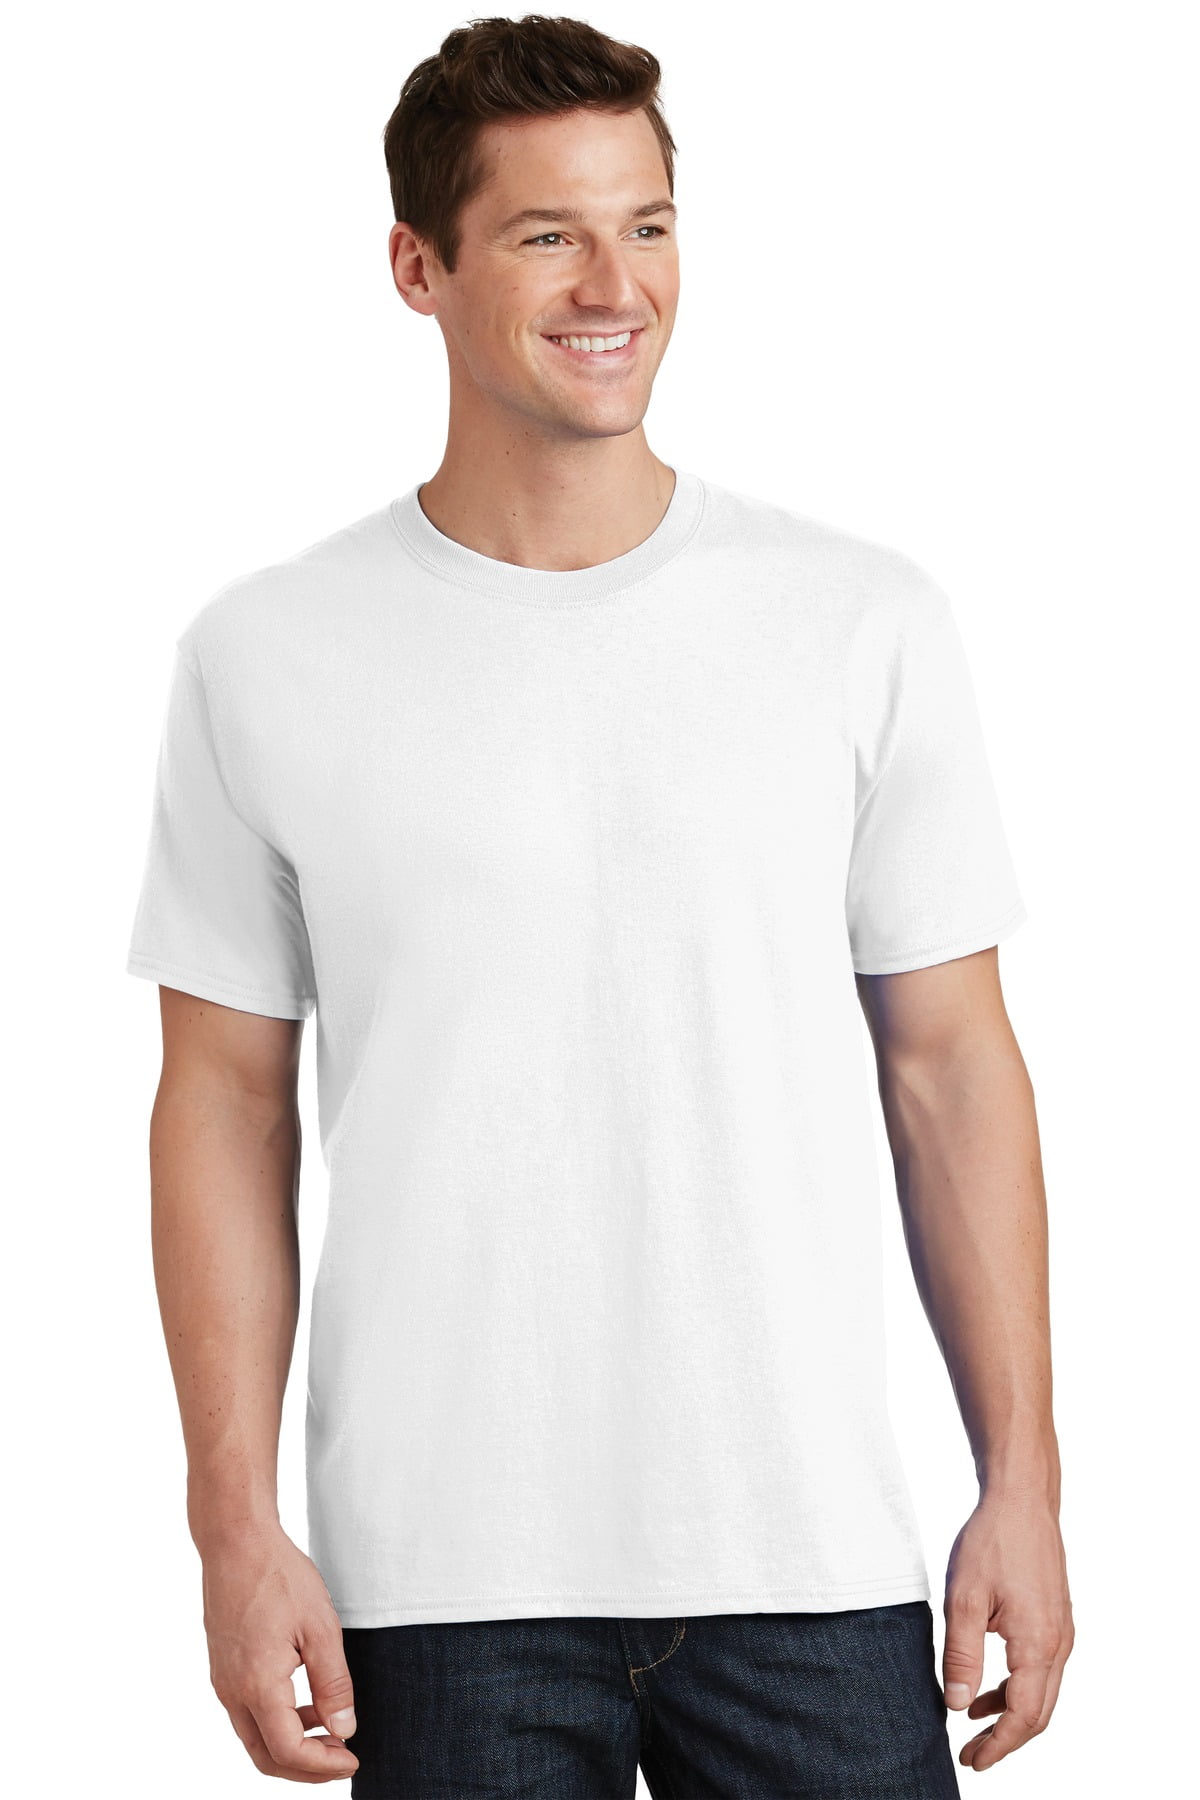 Port & Company Mens 54 oz 100% Cotton Pocket T Shirt 